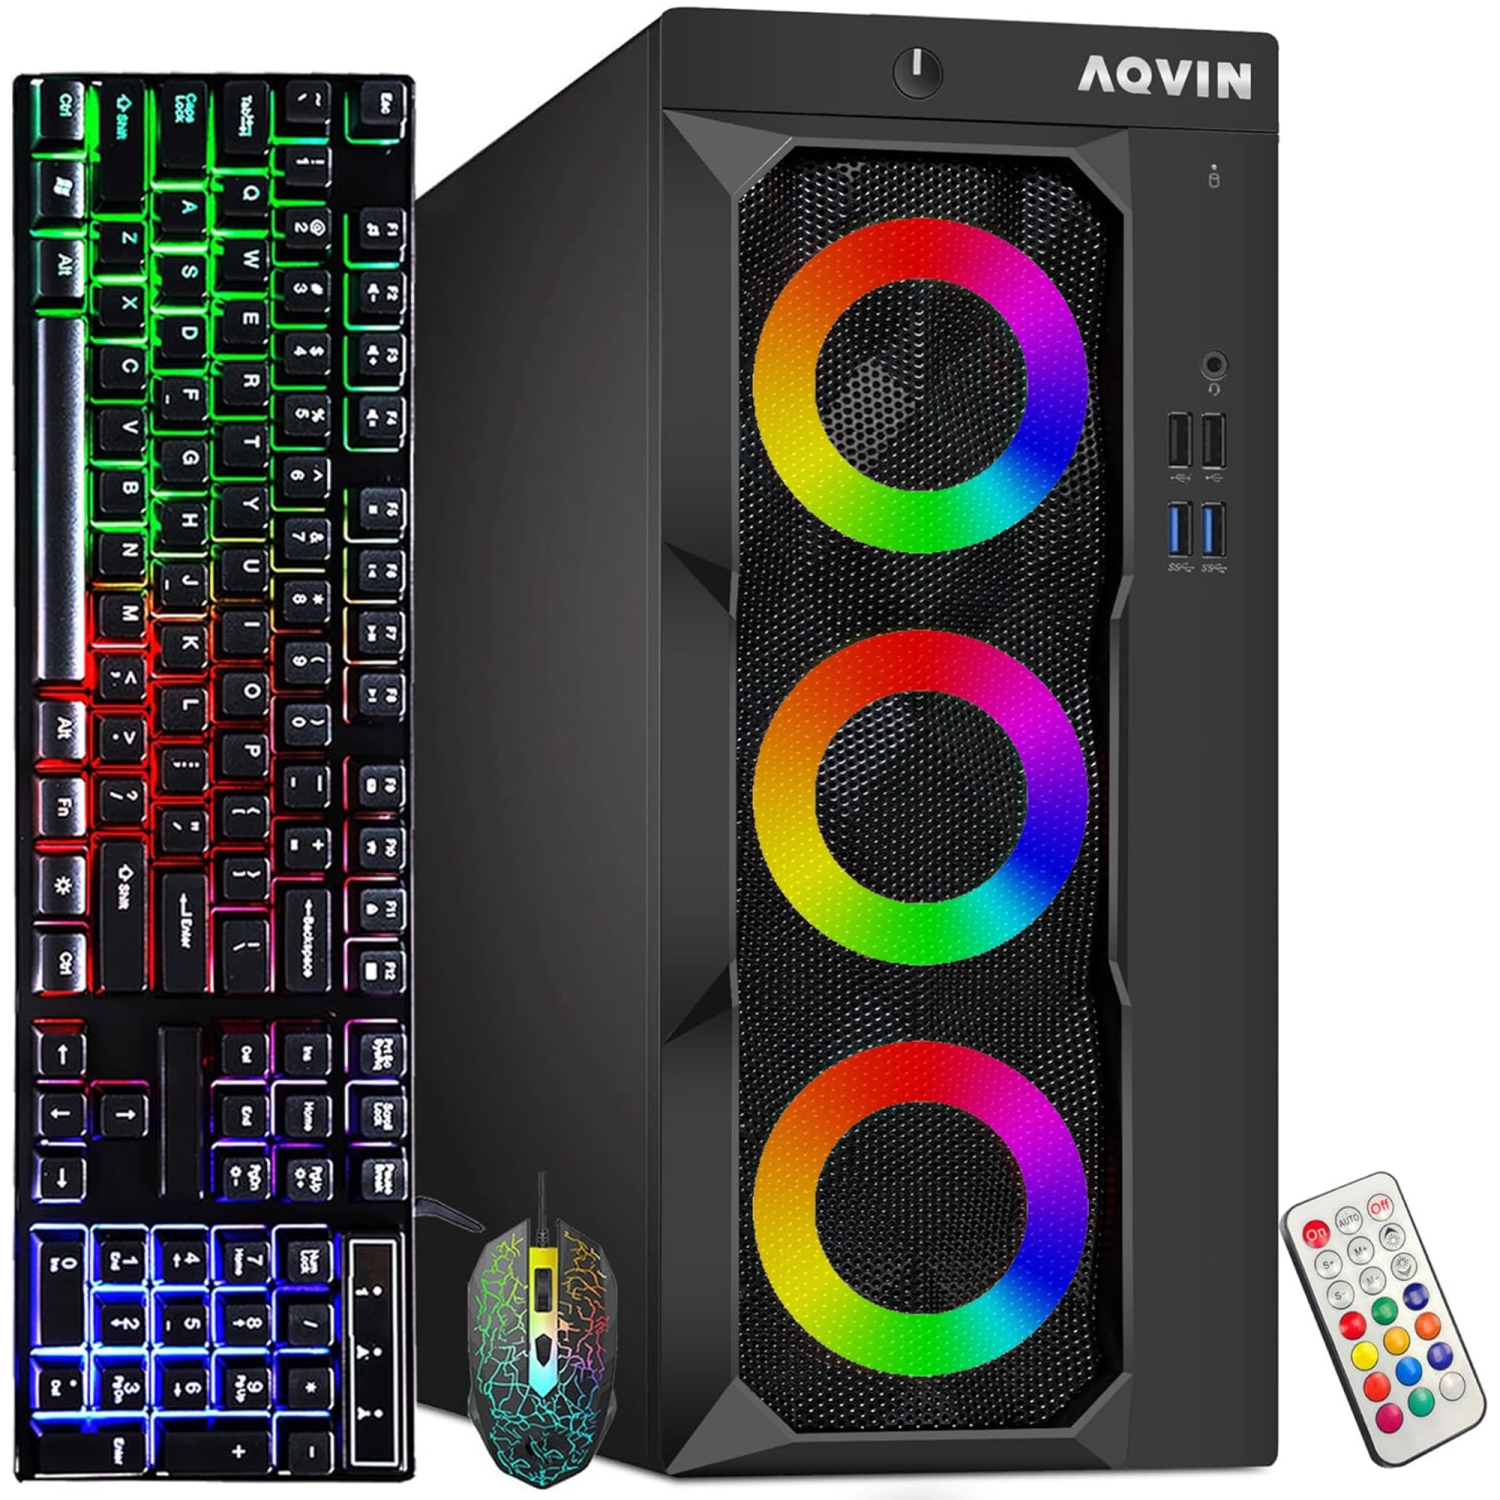 Refurbished (Excellent) - AQVIN LuminaRings RGB Gaming PC Desktop ~ Intel Core i7 Processor up to 4.0Ghz 32GB DDR4 RAM 1TB SSD GeForce GTX 1050Ti 4GB DDR5 HDMI Windows 10 Pro WIFI